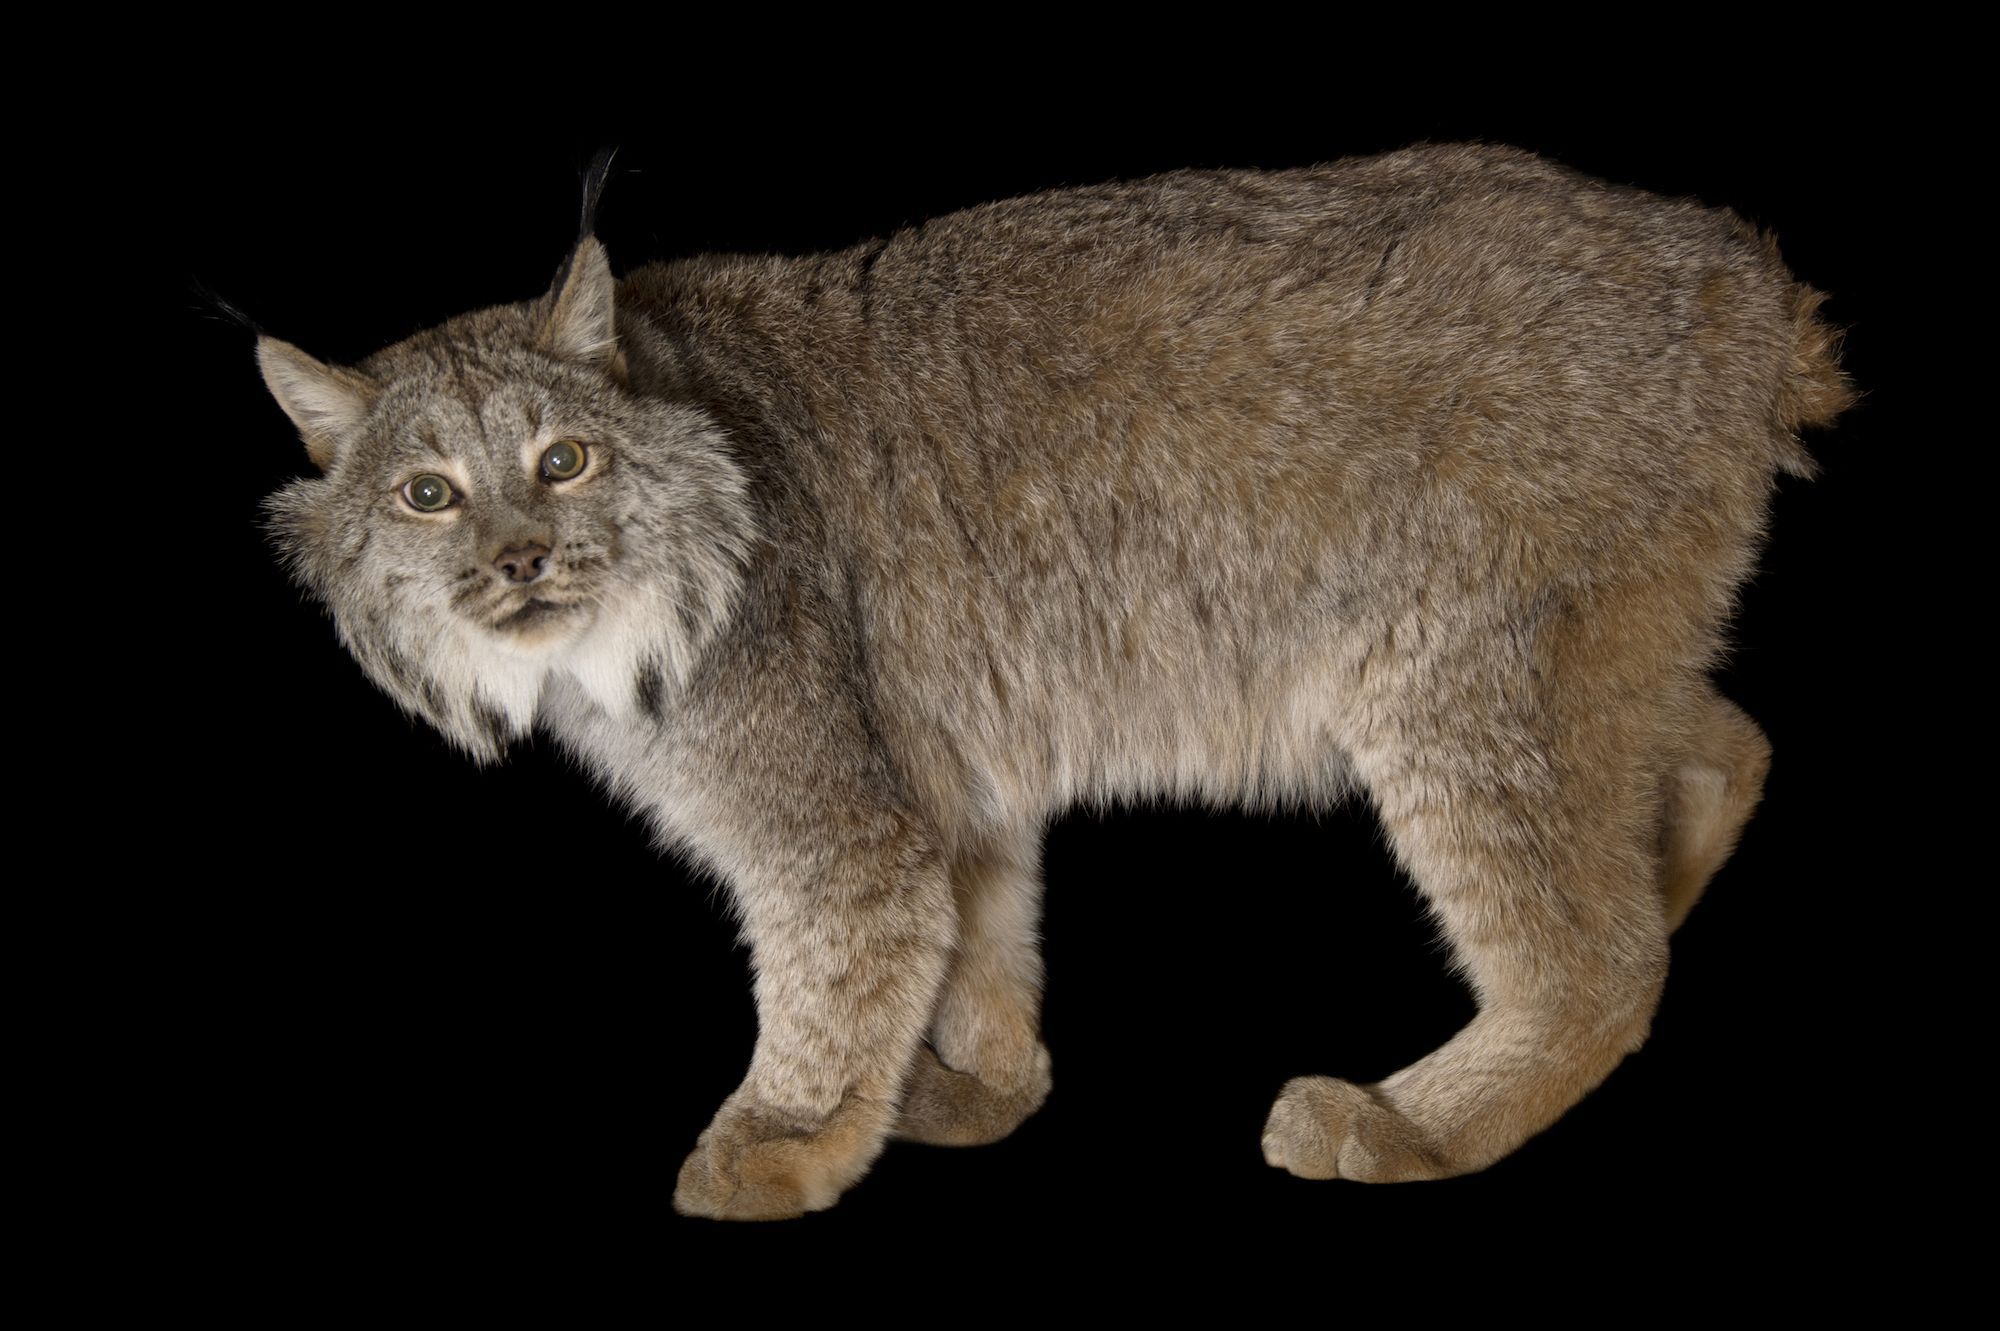 Photo Ark: Canada Lynx. National Geographic Society